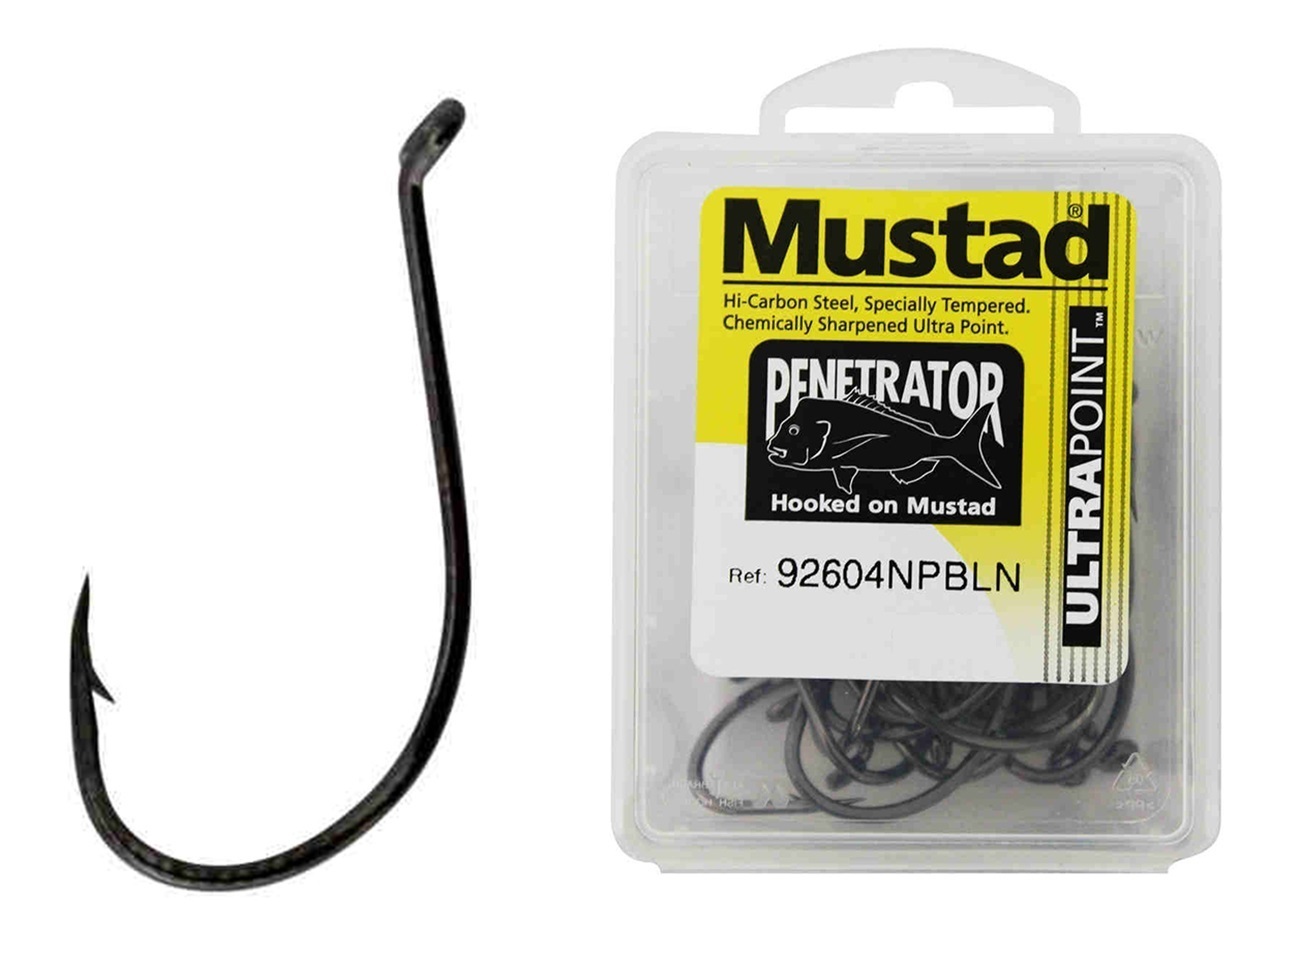 Mustad 92604npbln - Size 7/0 Qty 25 - Penetrator Hooks Chemical Sharp